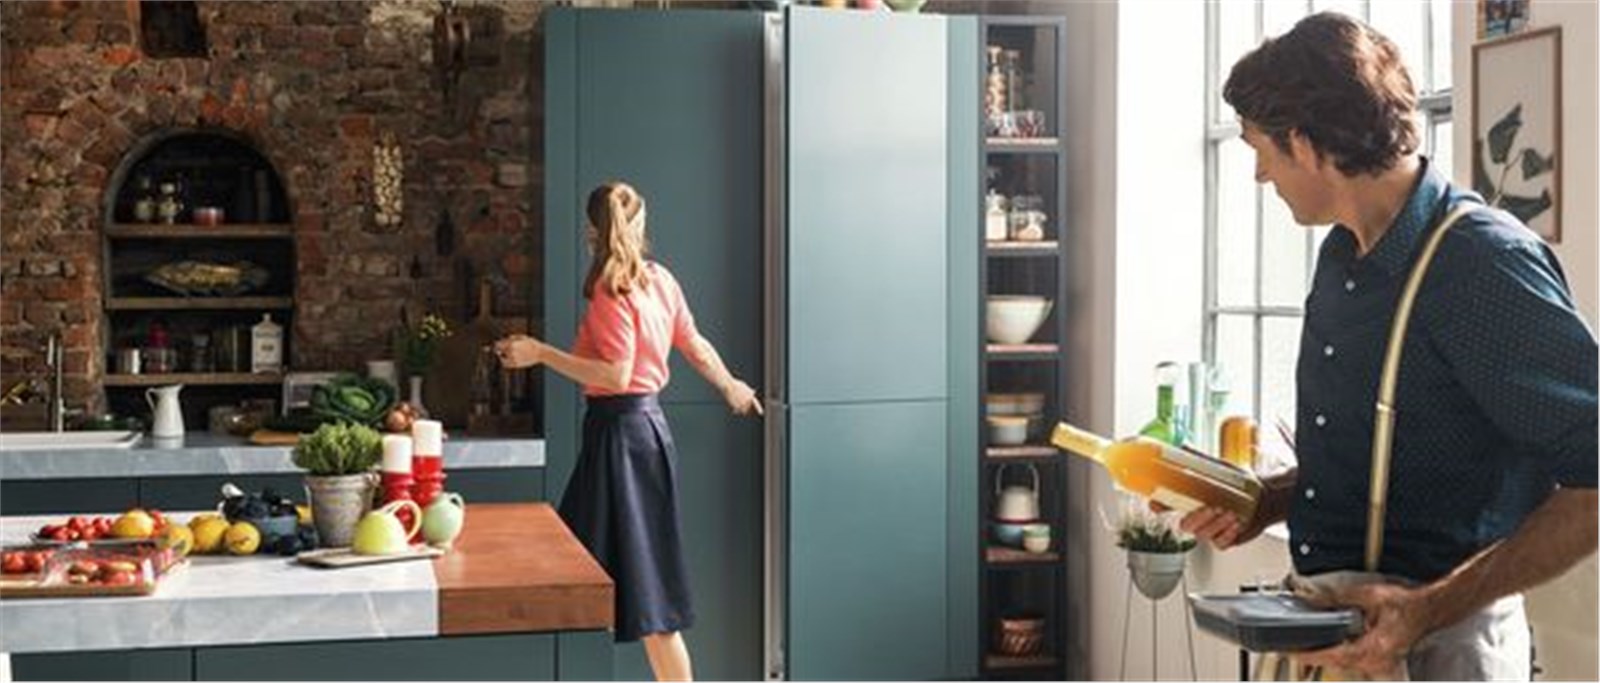 Perché scegliere una cucina con frigo a vista